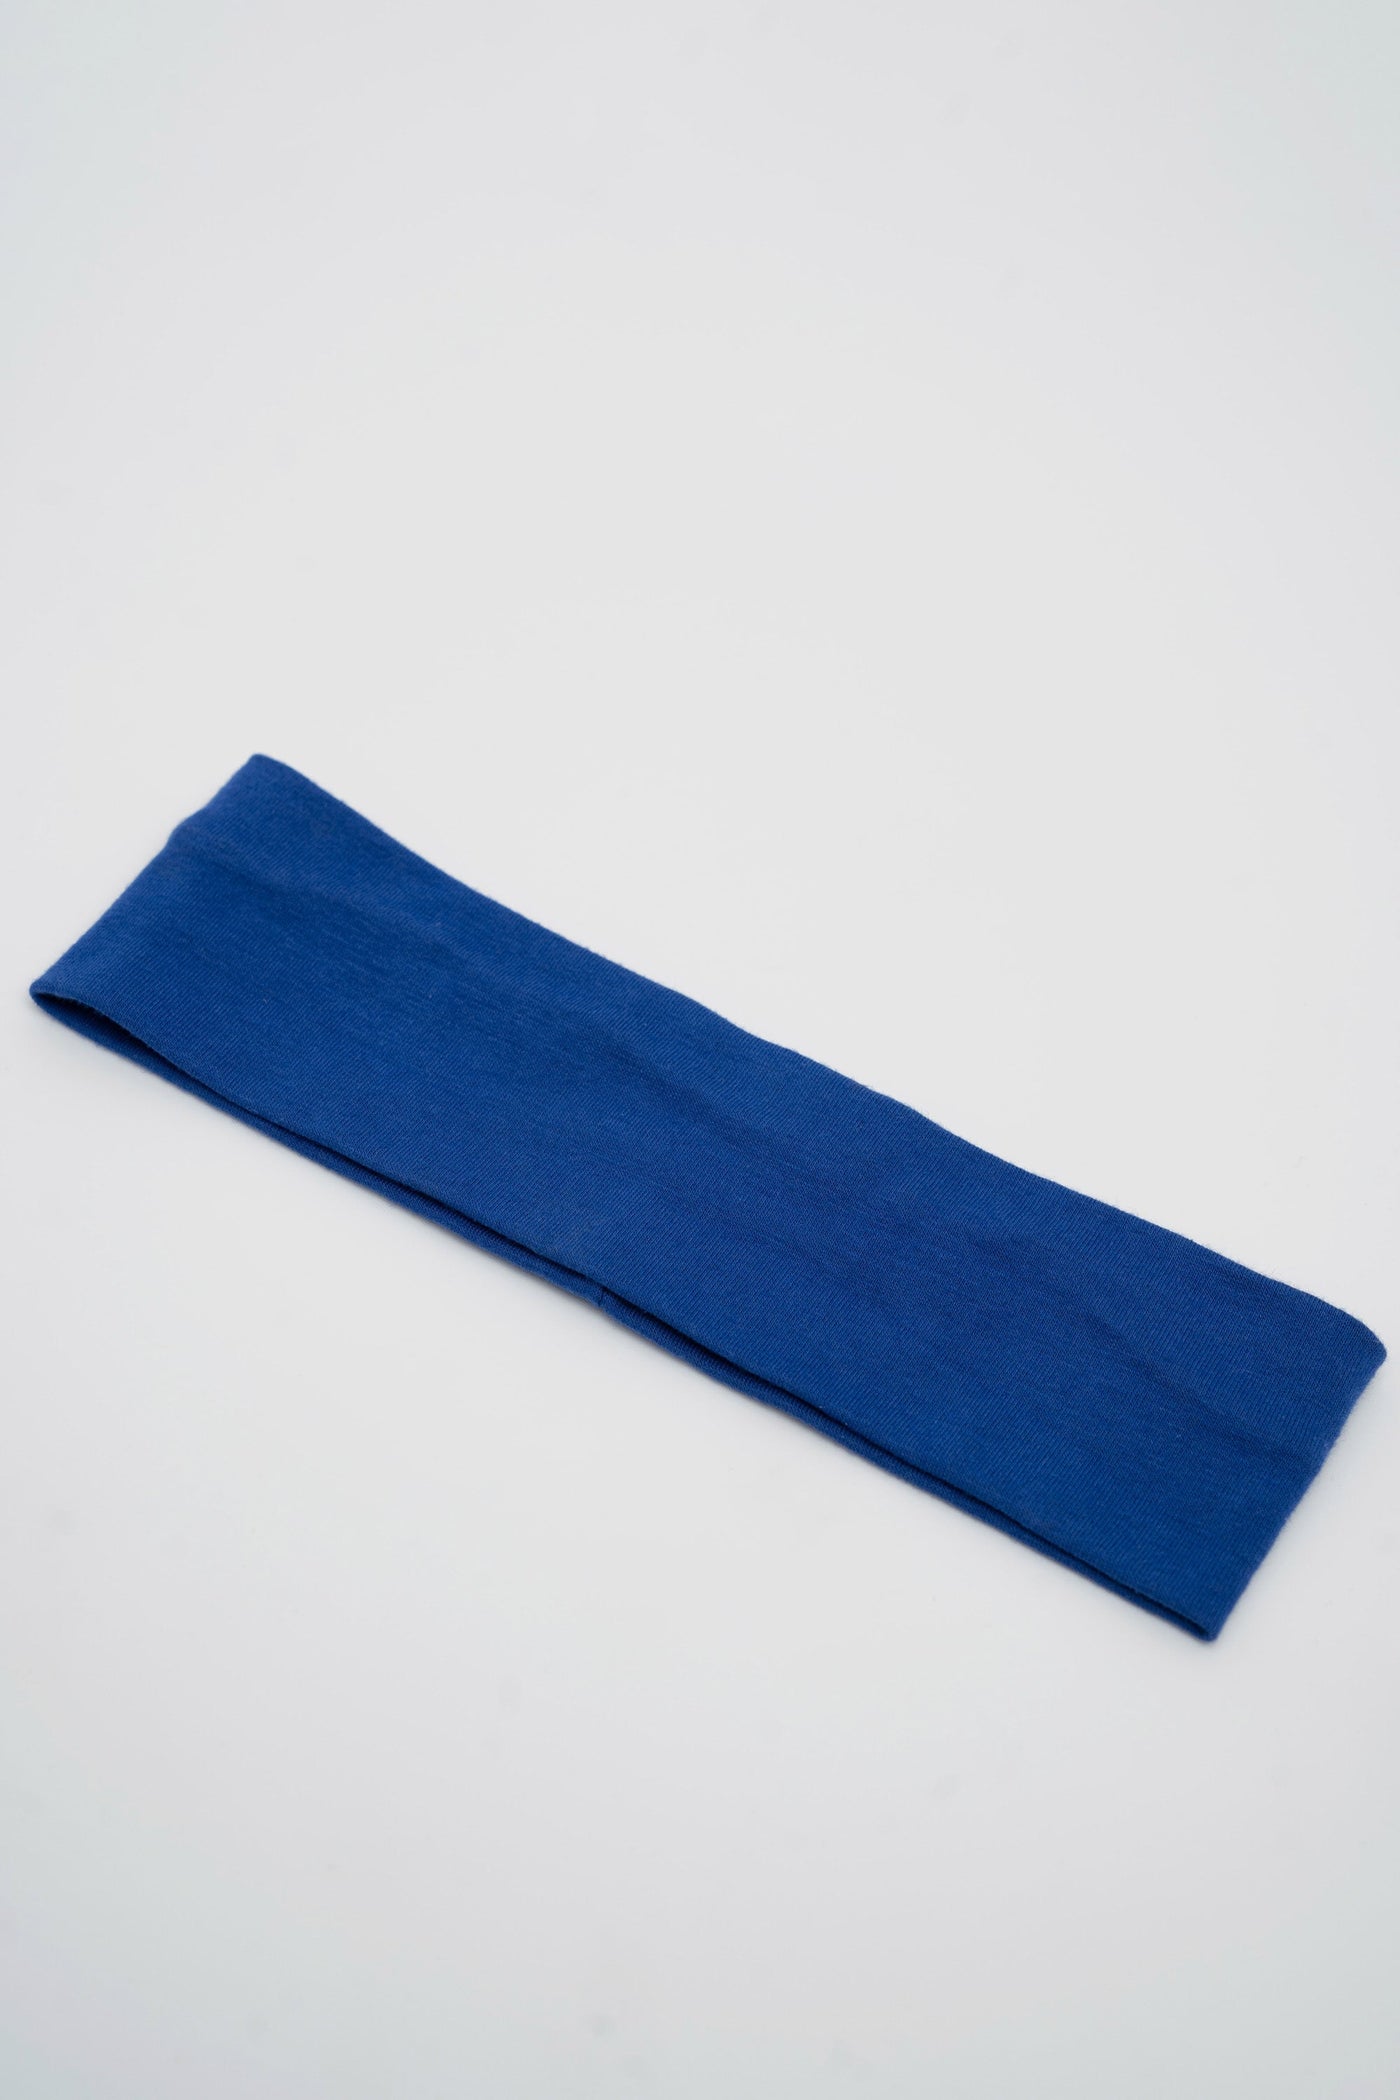 Everyday Headband - Royal Blue Headband Selfawear 